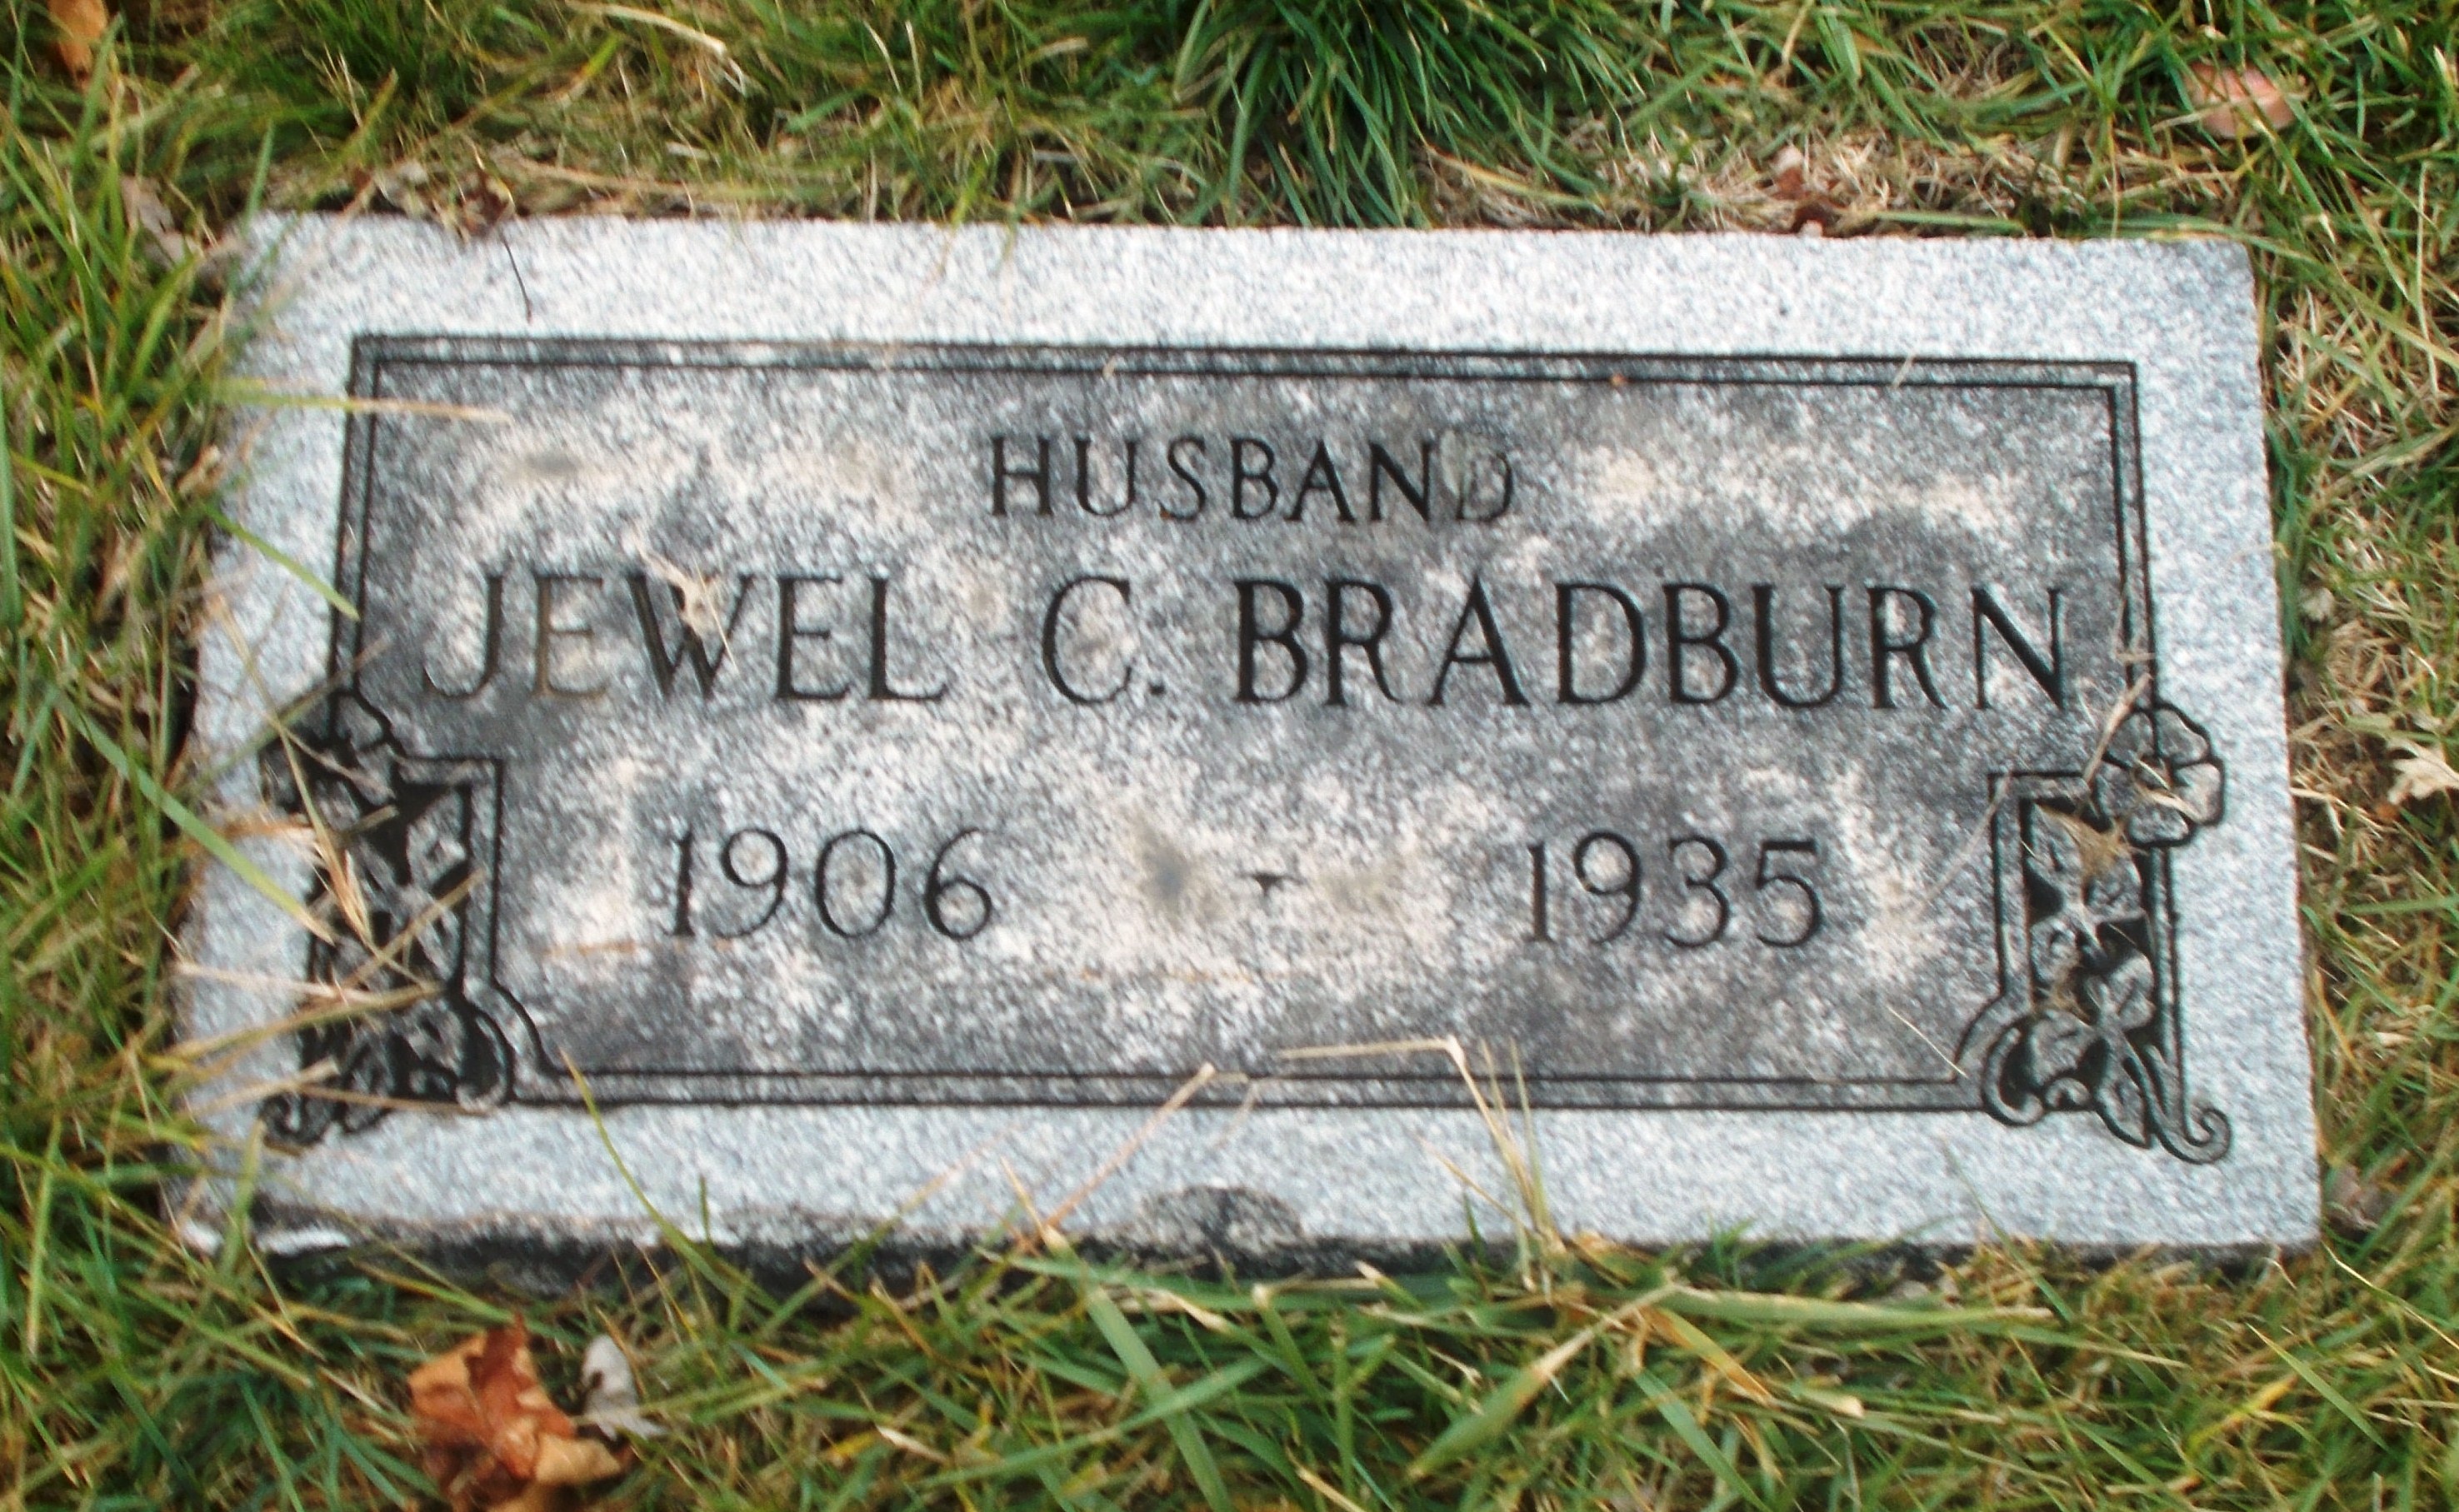 Jewel C Bradburn